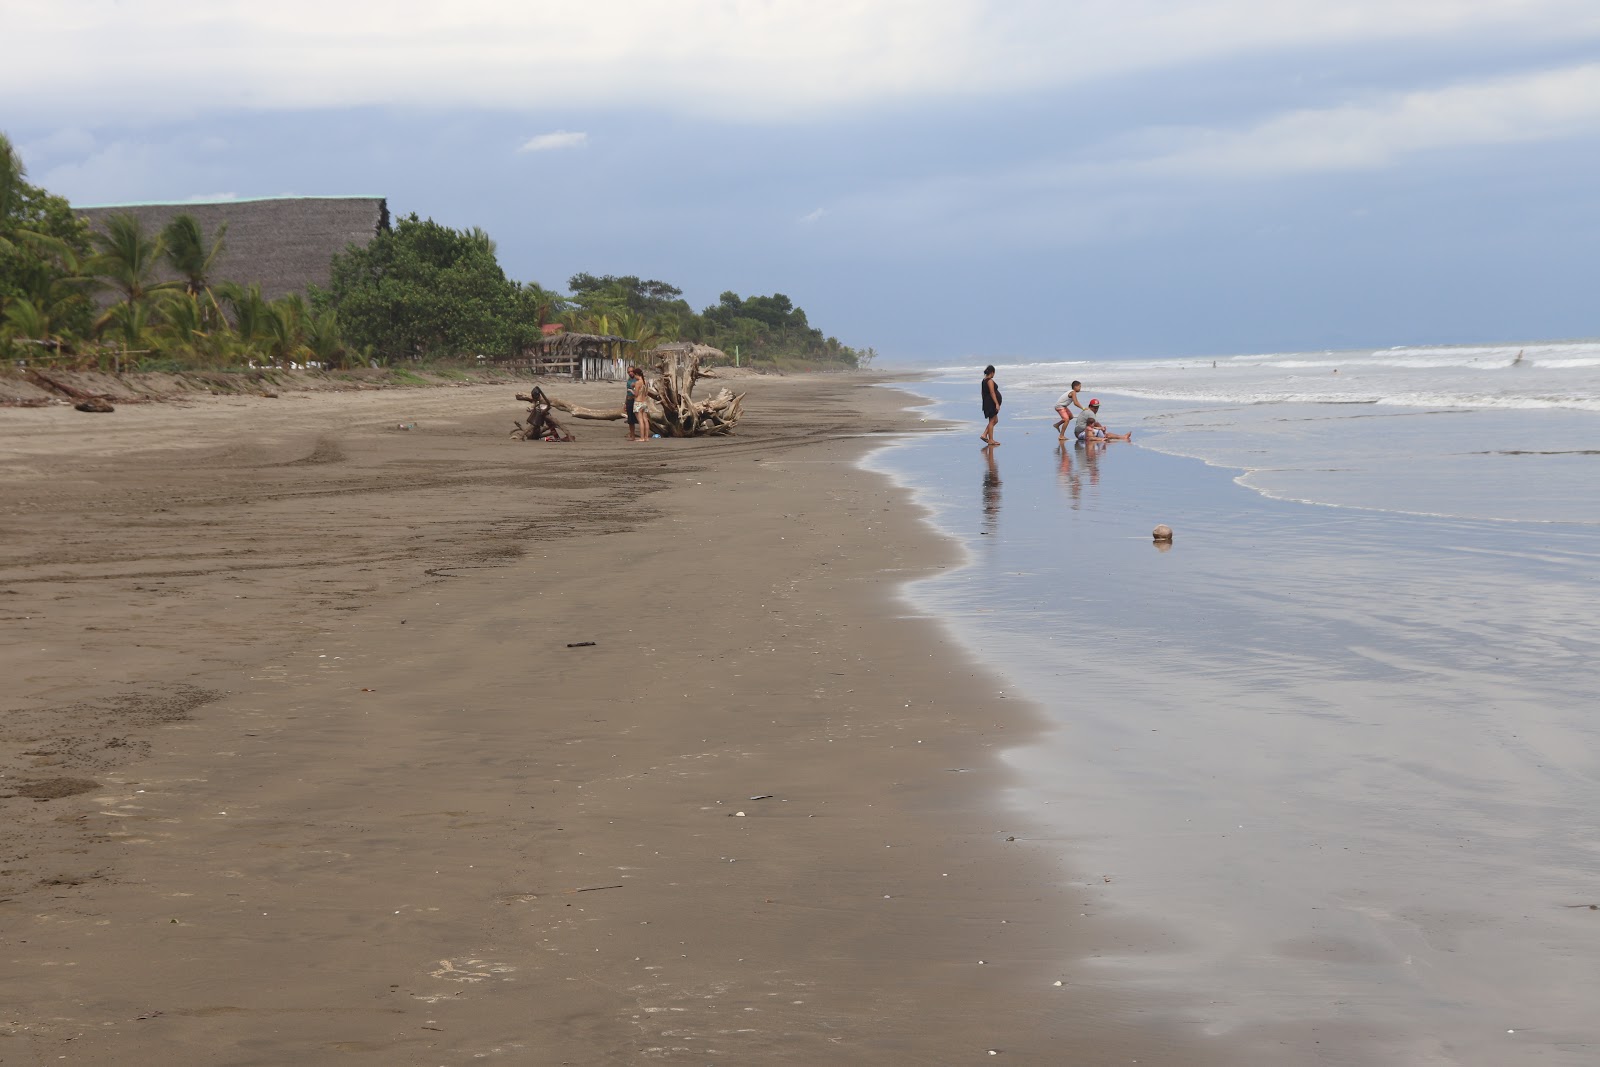 Foto de The Slabs Beach - lugar popular entre os apreciadores de relaxamento